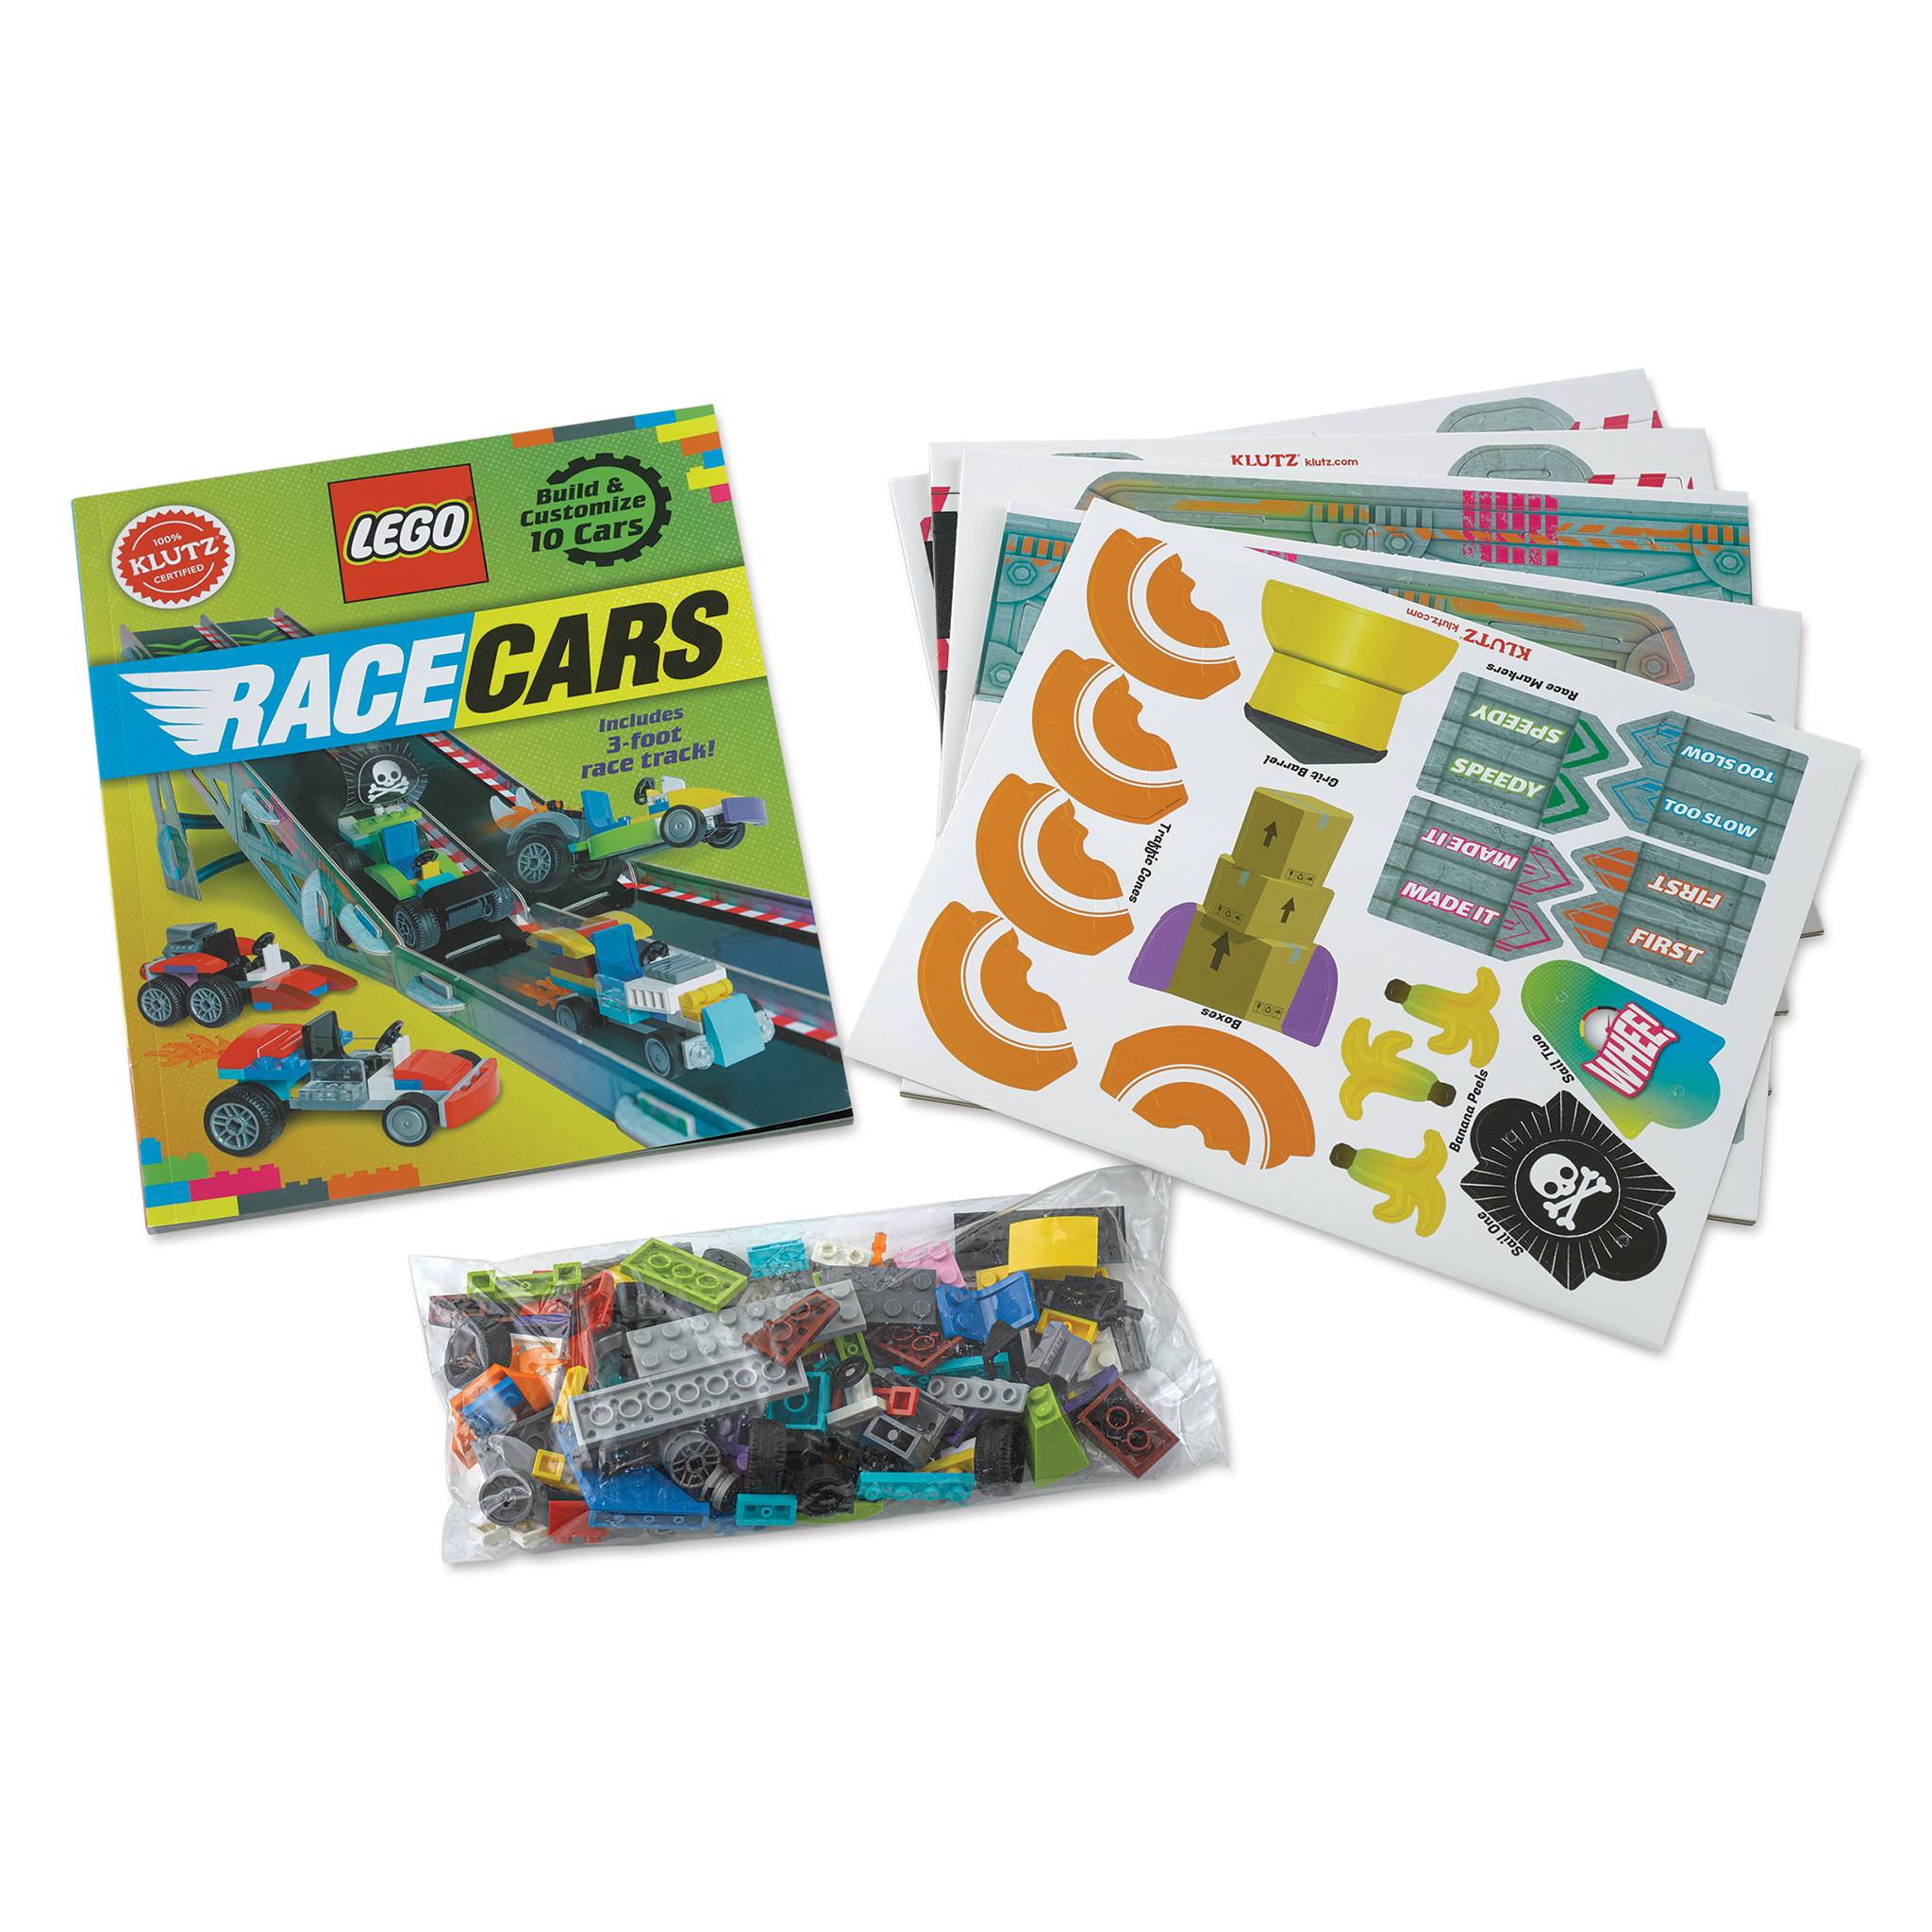 Klutz Lego Race Cars Kit | BLICK Art Materials